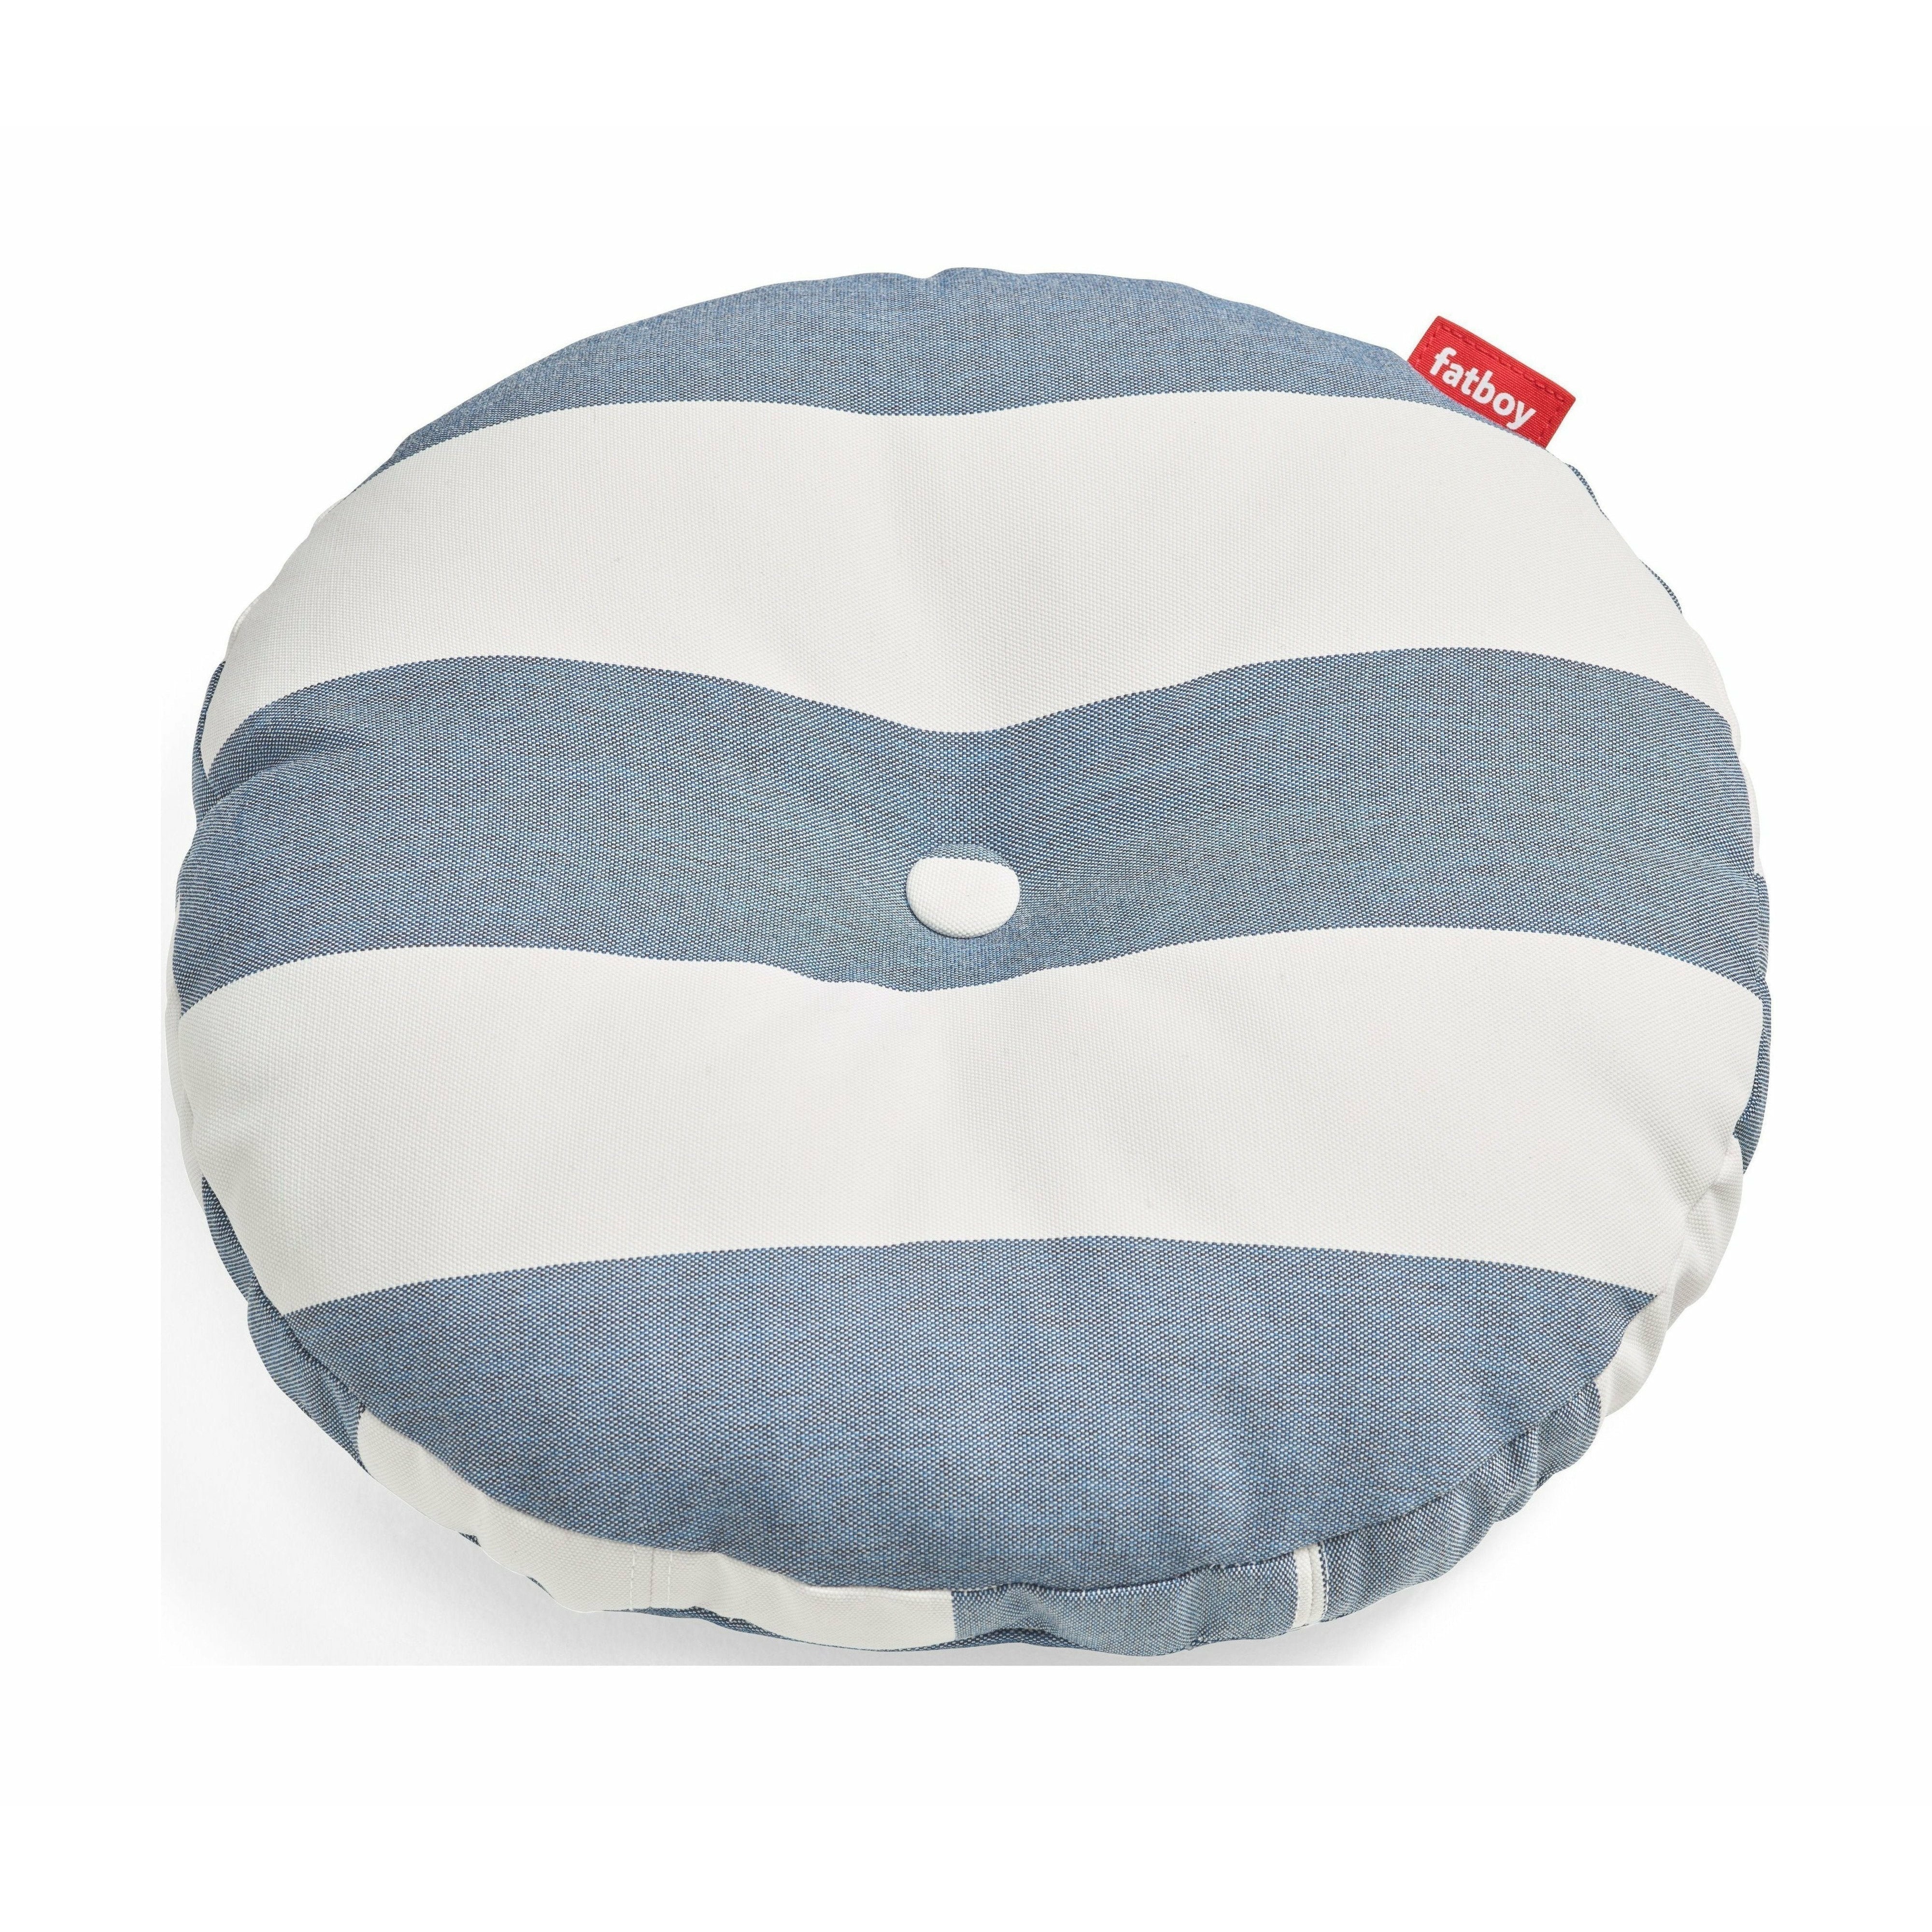 Fatboy Circle Pillow Outdoor Round Round Garden Cushion, Stripe Ocean Blue